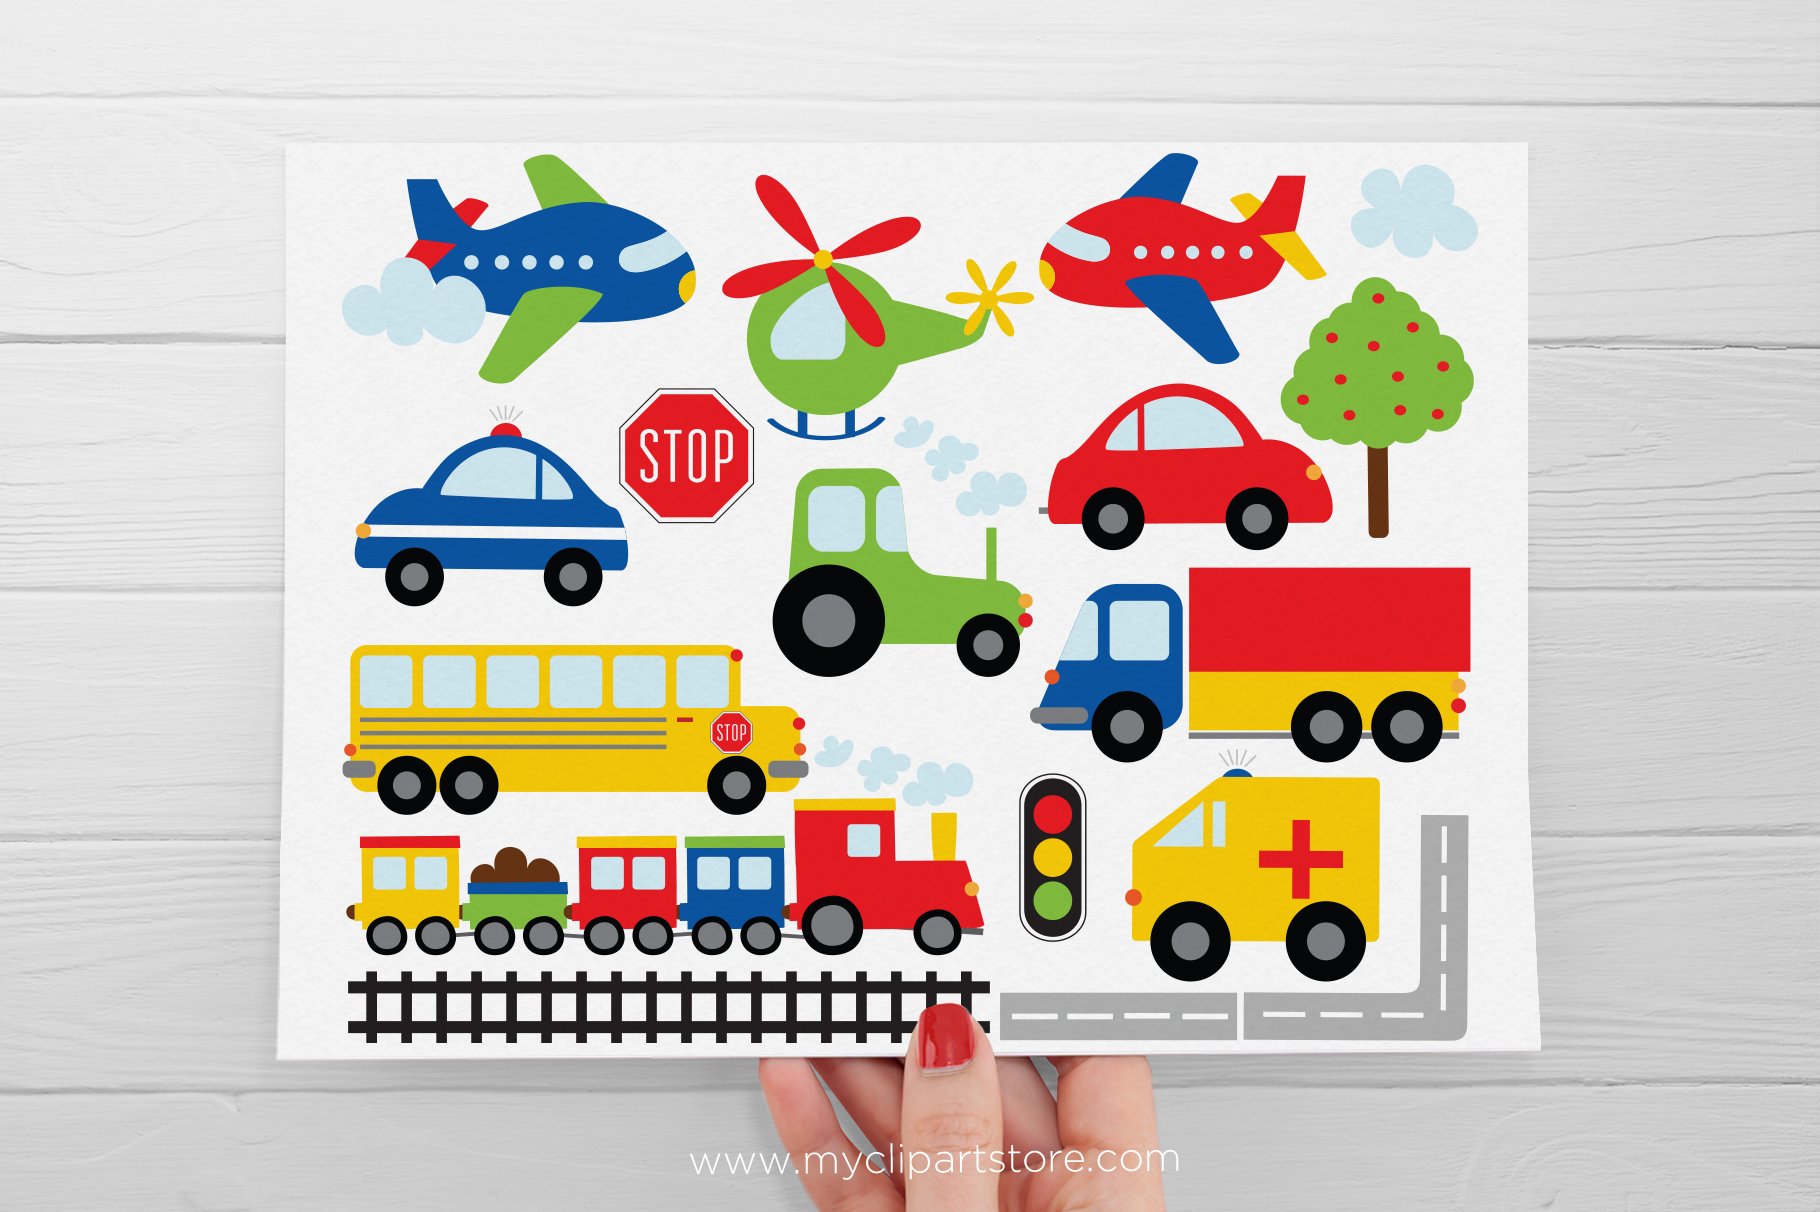 Trains, Planes & Trucks Clipart, SVG.